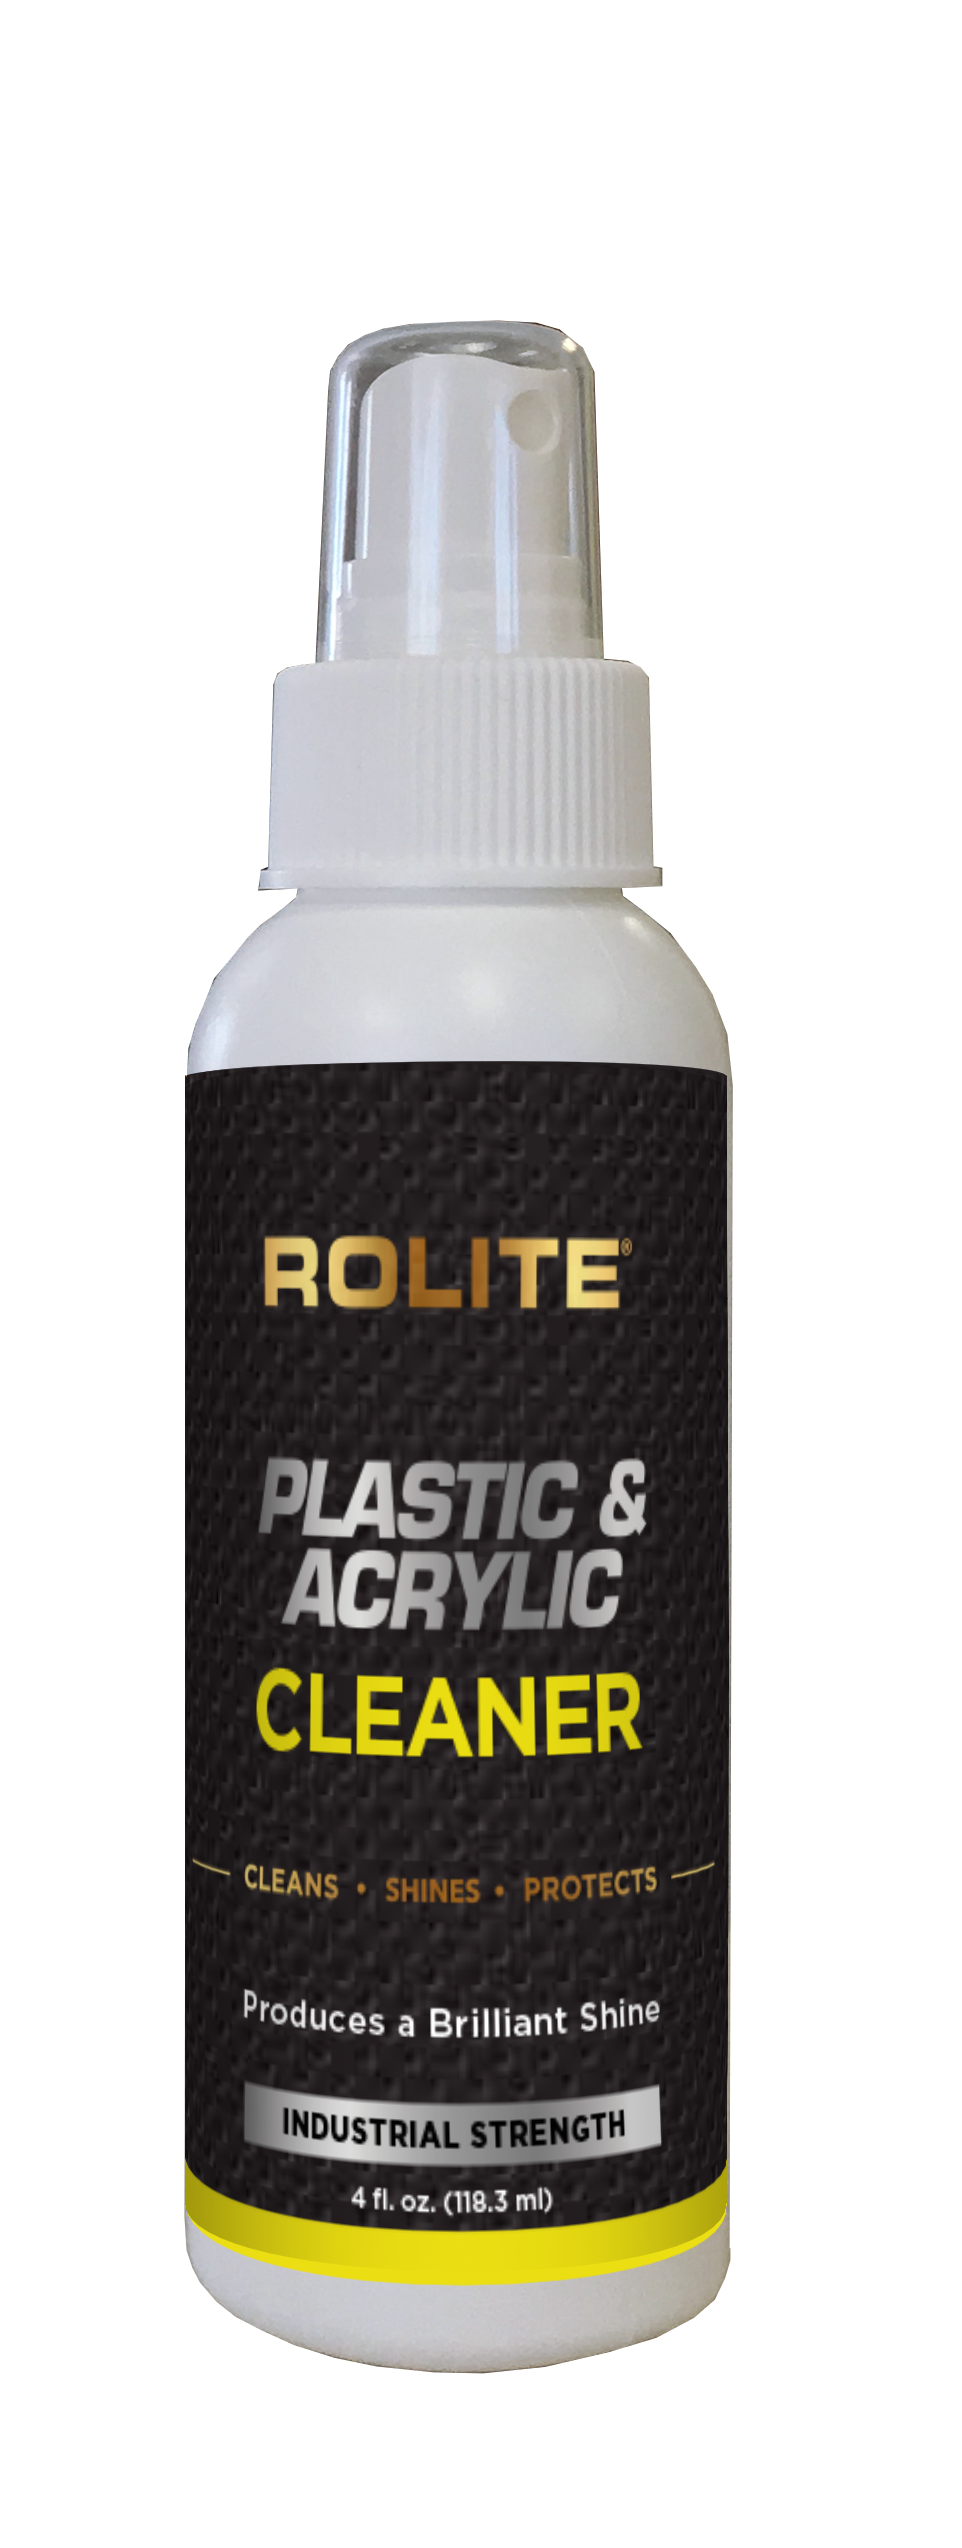 ROLITE Plastic & Acrylic Cleaner 4oz Bottle